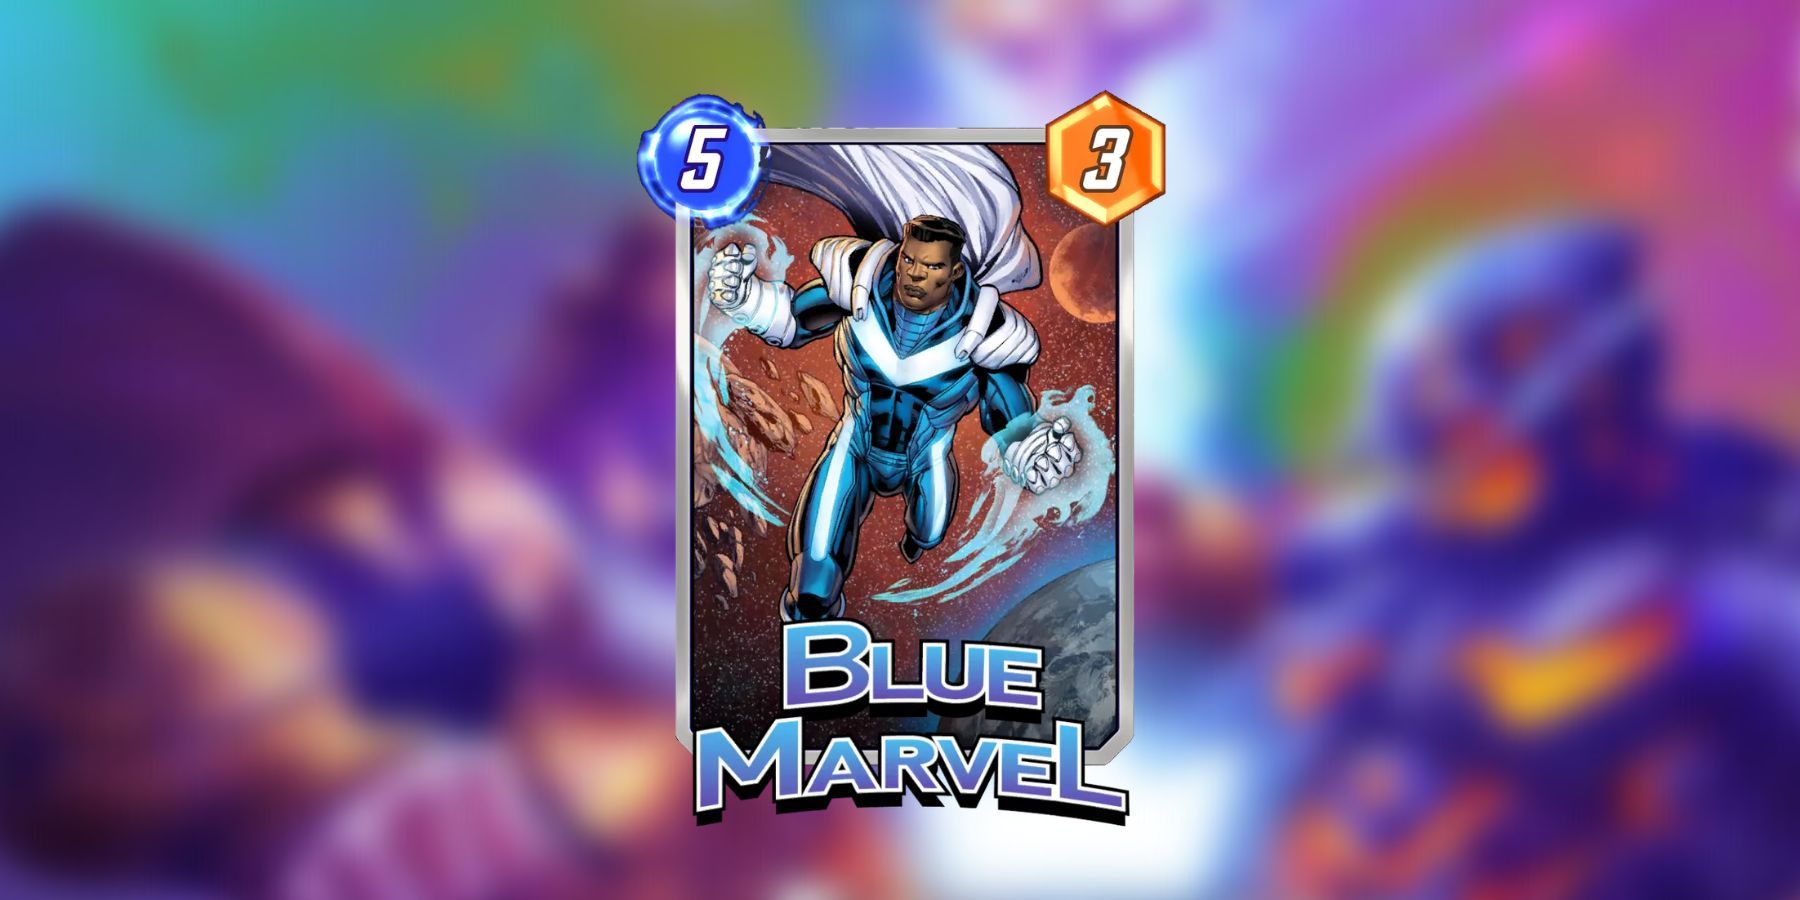 blue marvel card in marvel snap.